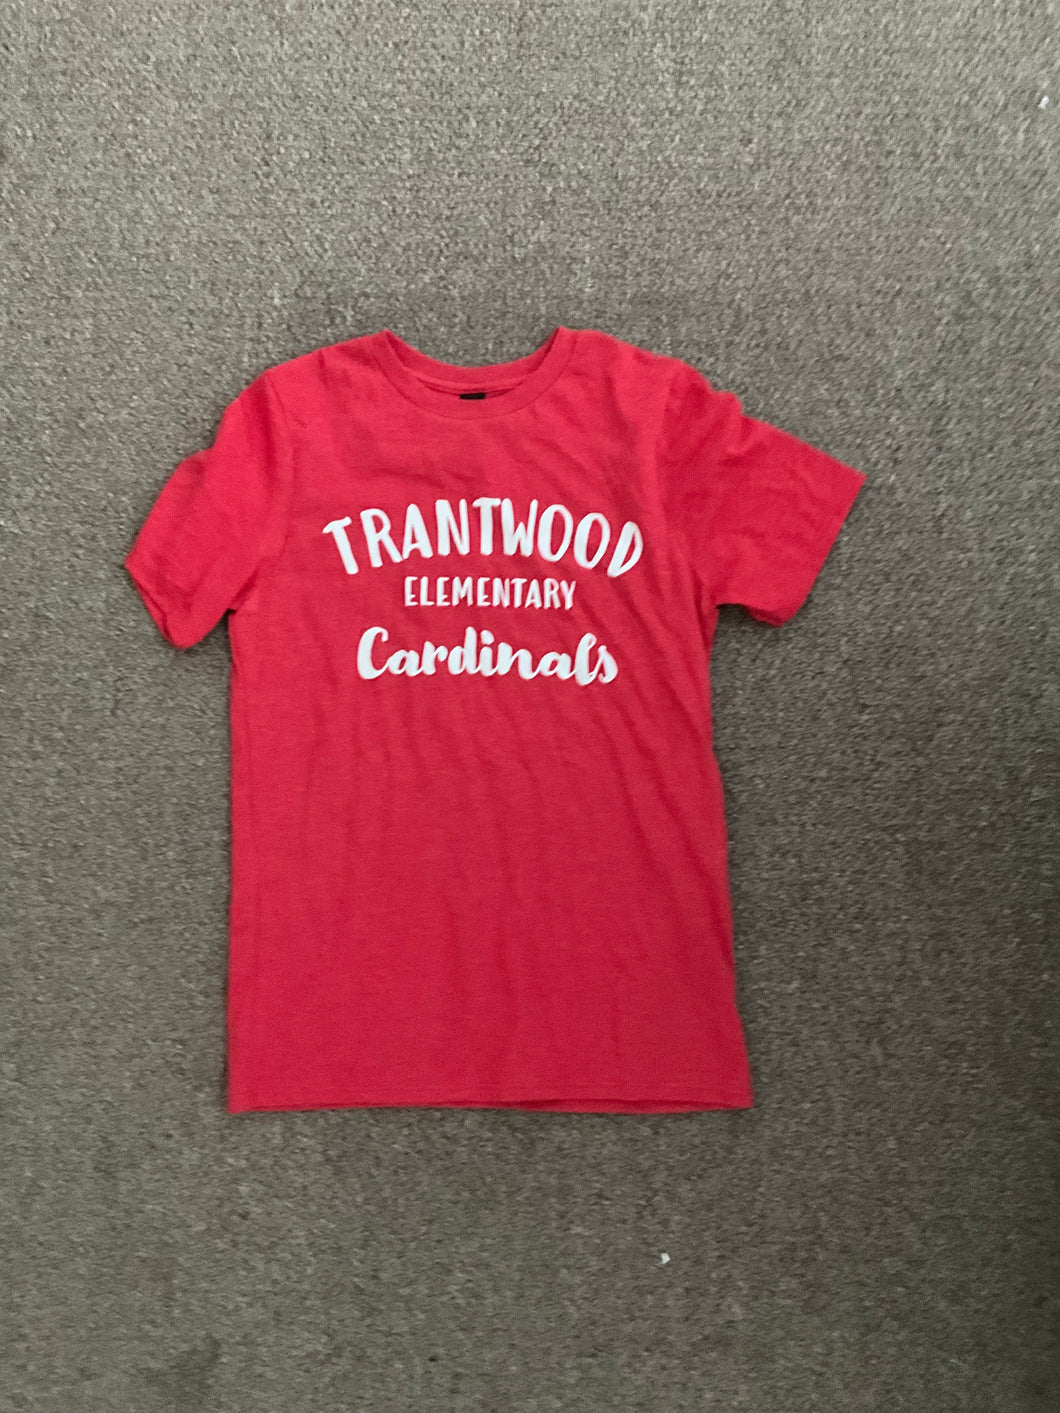 Trantwood Elementary School/Red Tee